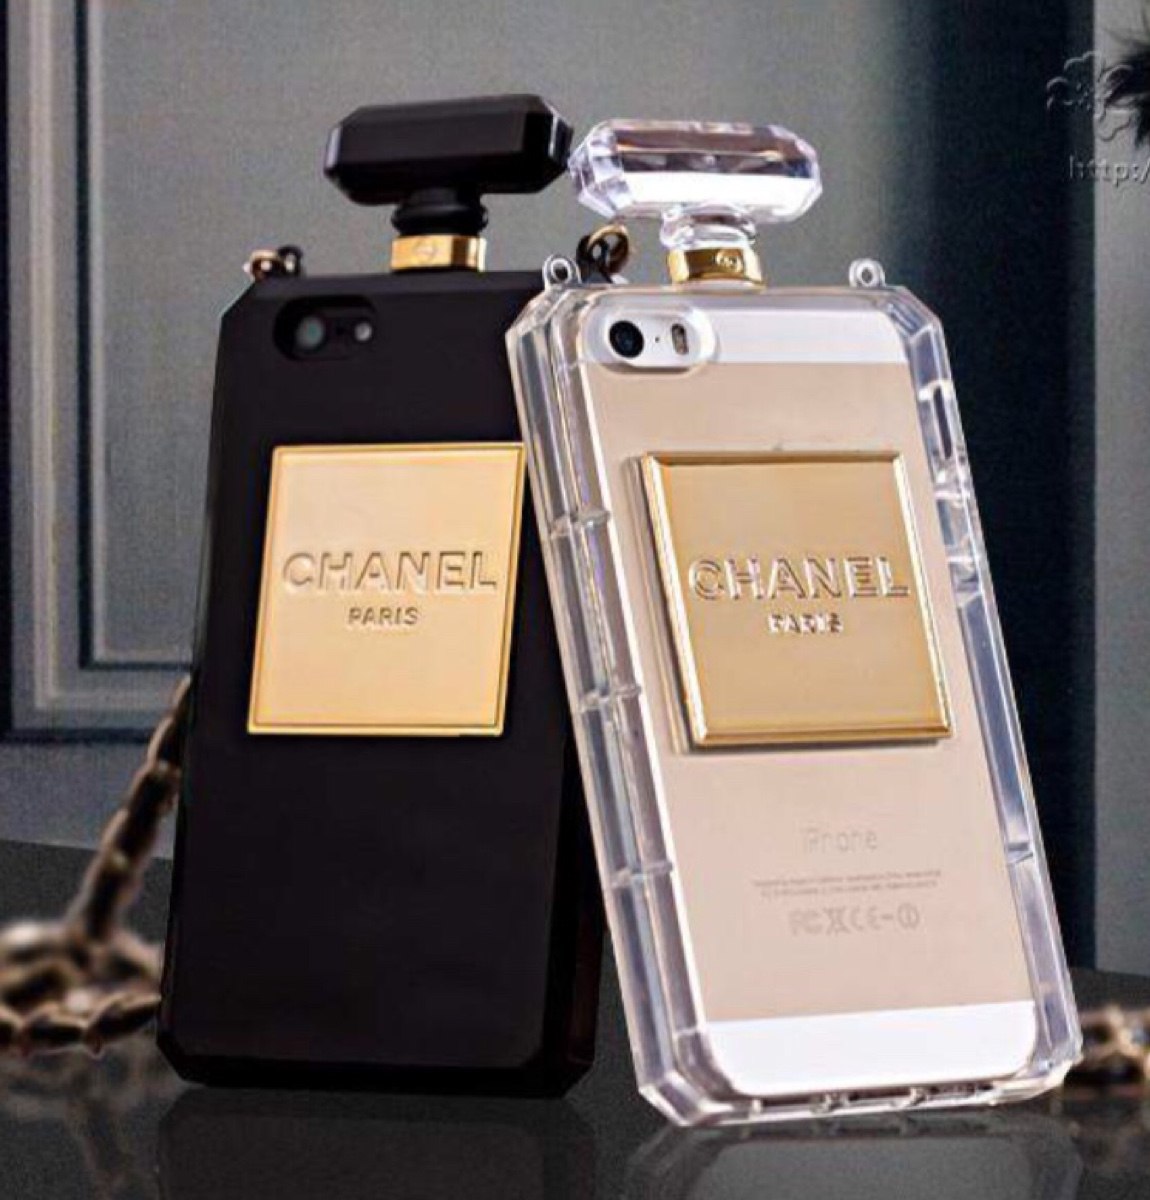 Case Perfume Chanel Iphone 4 5 6 6plus S4 Motog R 49 99 Em Mercado Livre